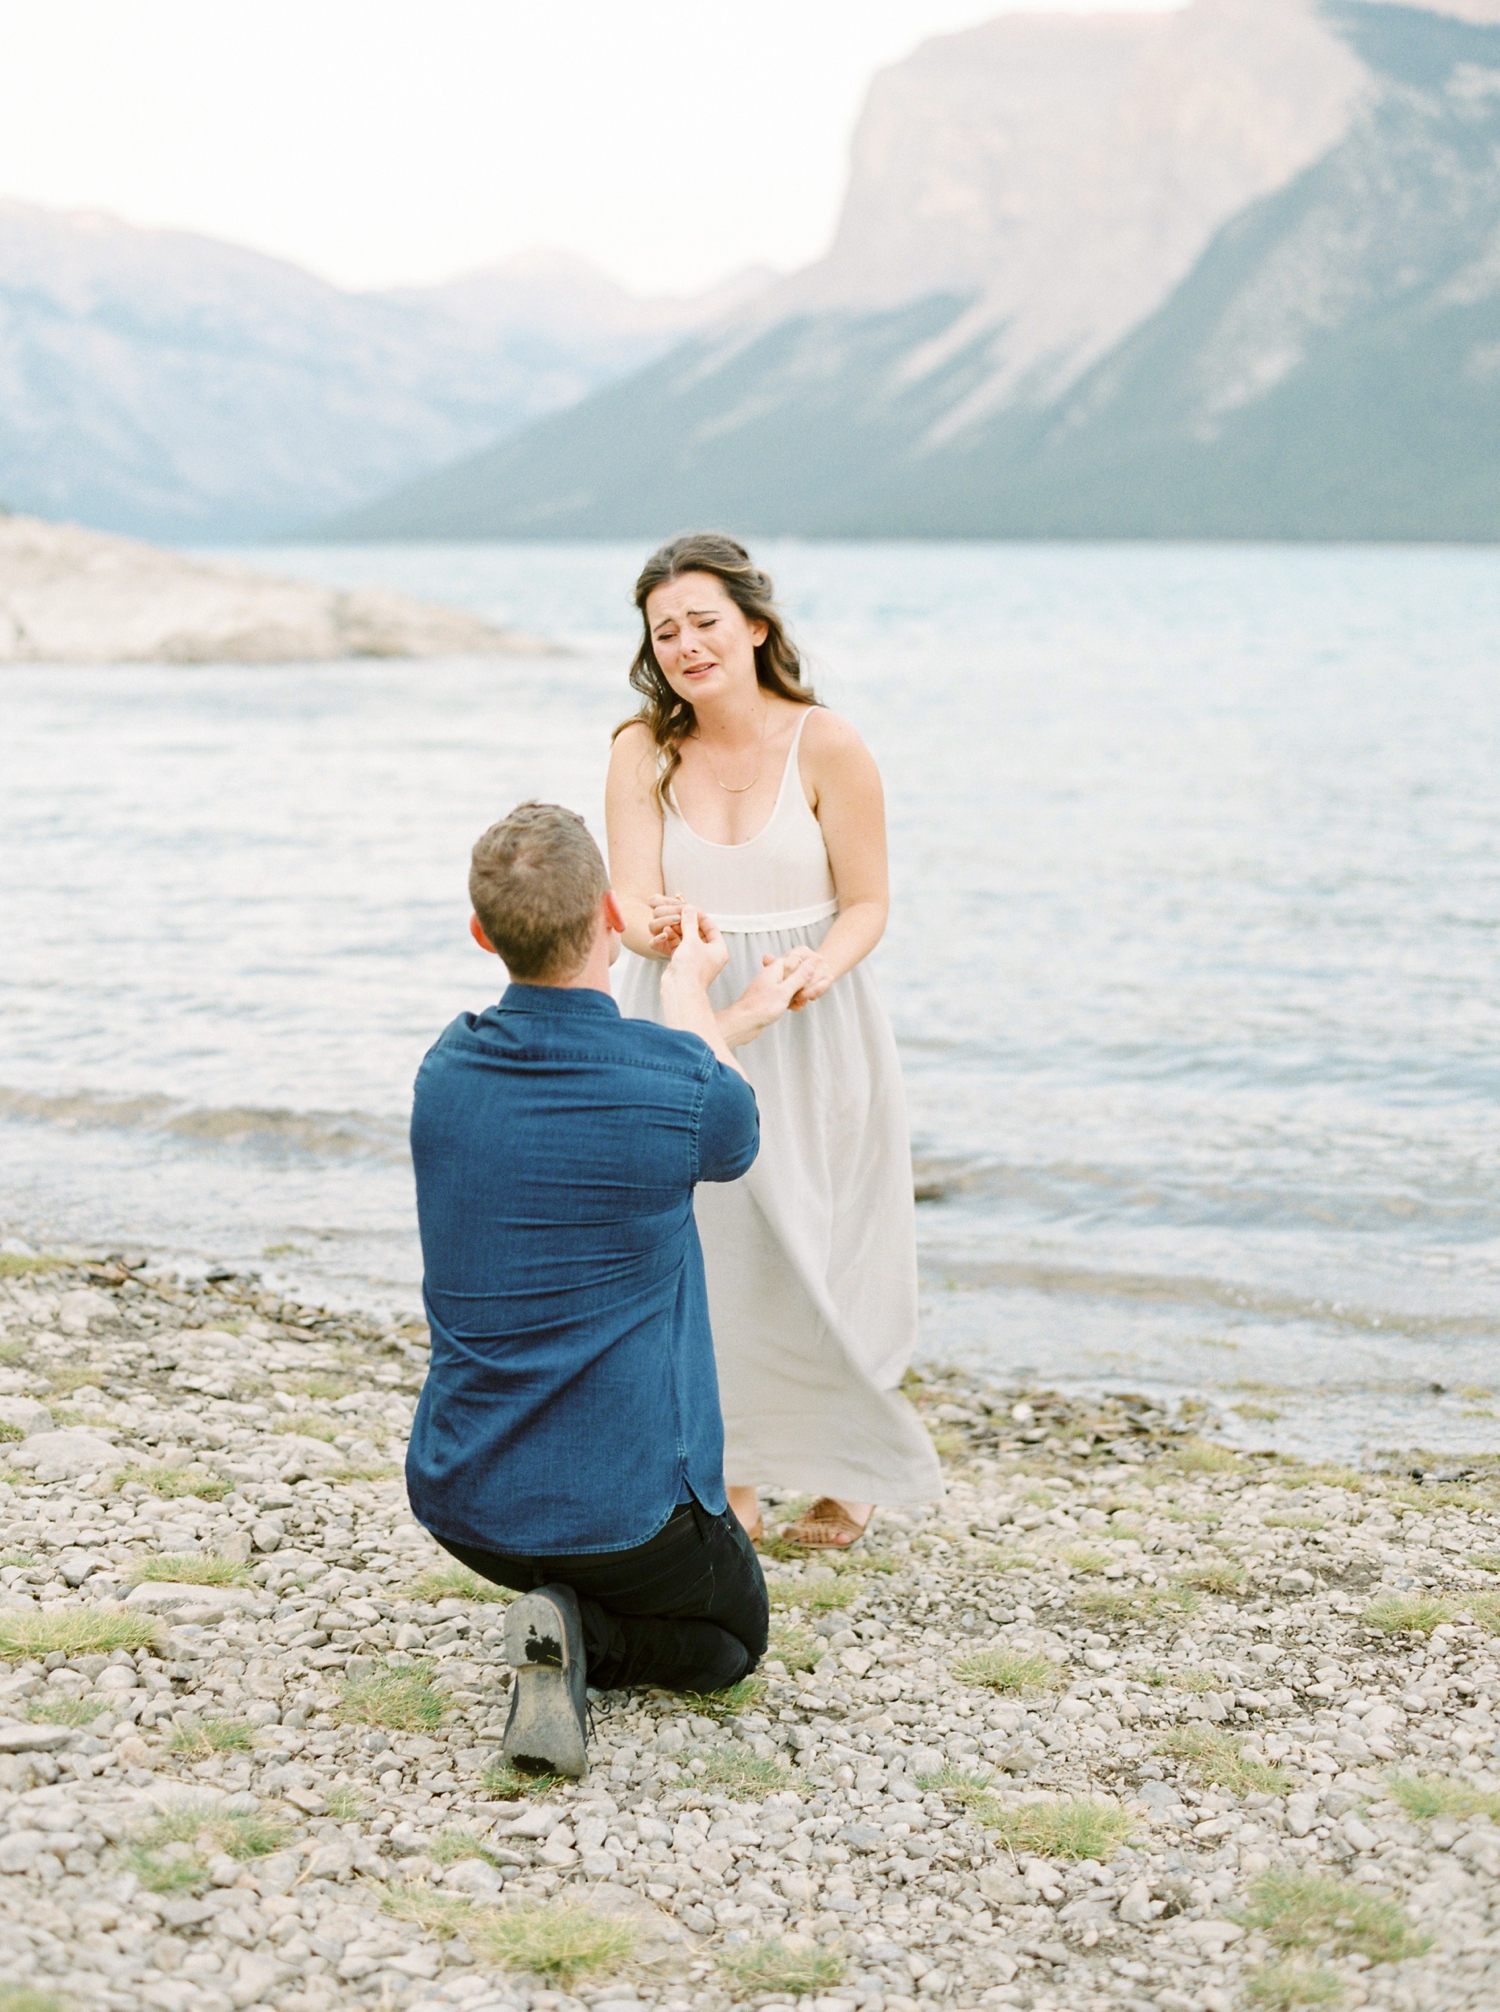 Banff Engagement Photographers | Banff Proposal Photography | Justine Milton 